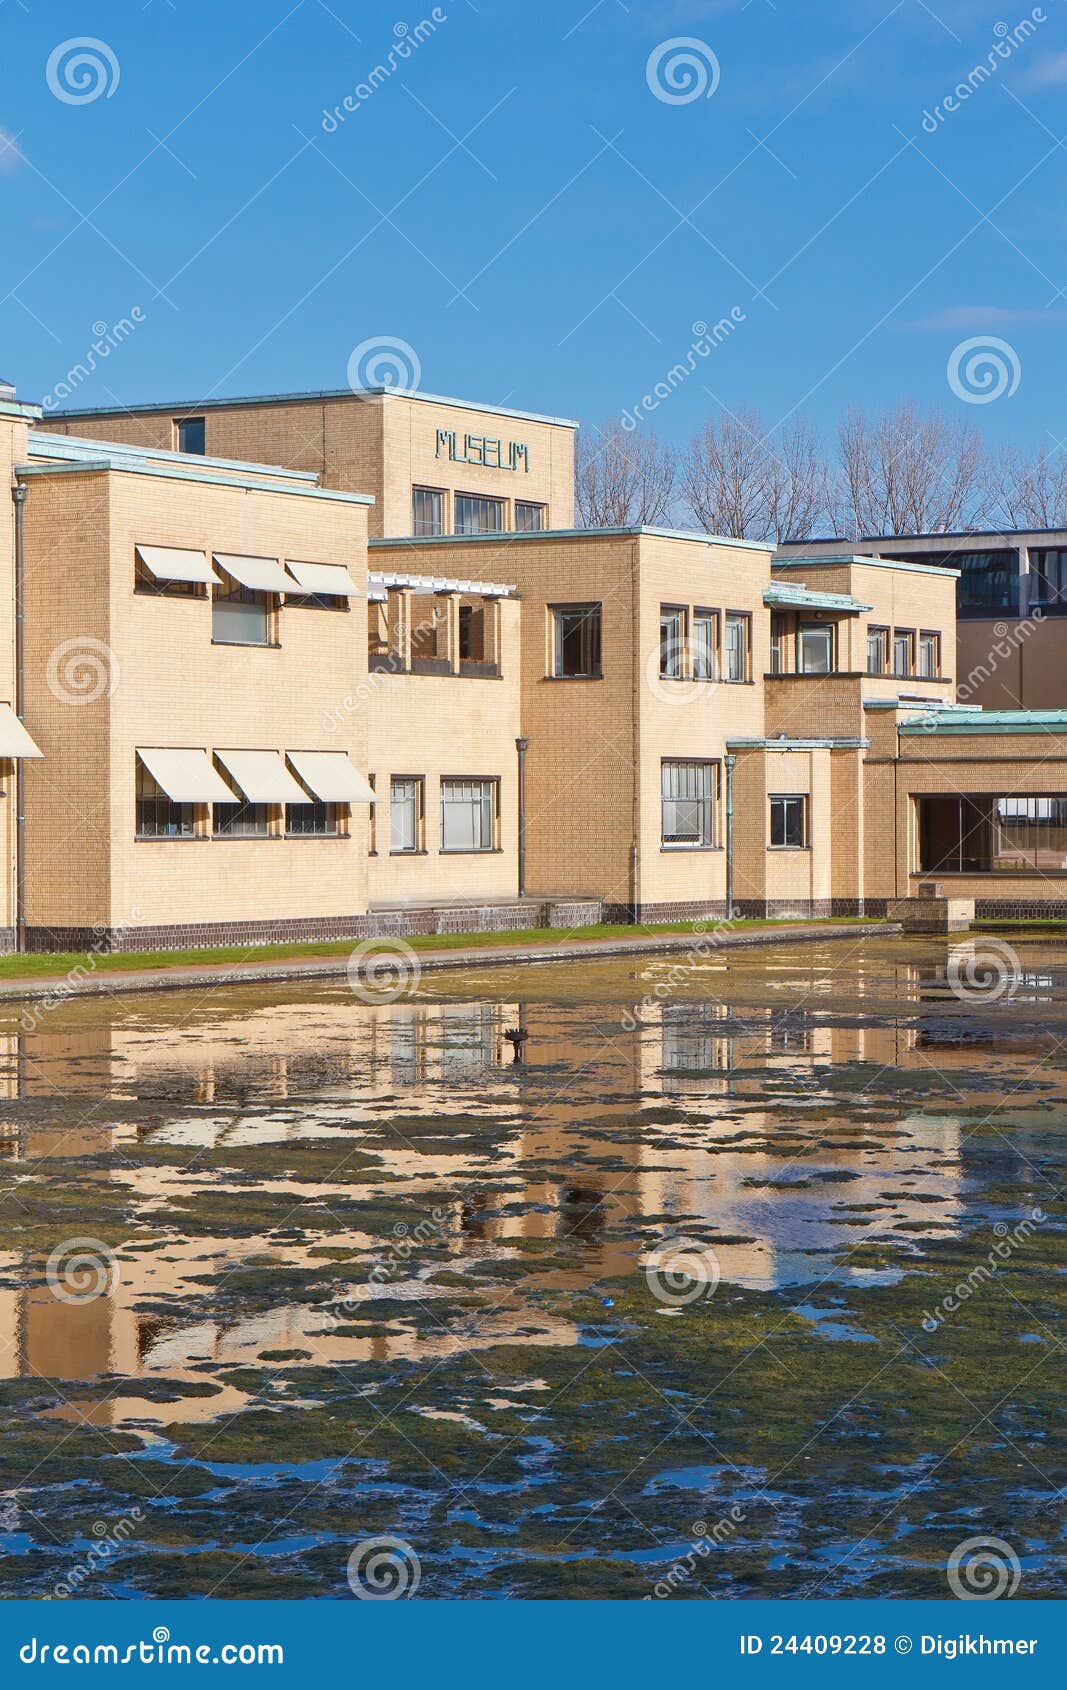 Gemeente museon，自治市博物馆. 池的水的反映黄色砖自治市博物馆，海牙，荷兰